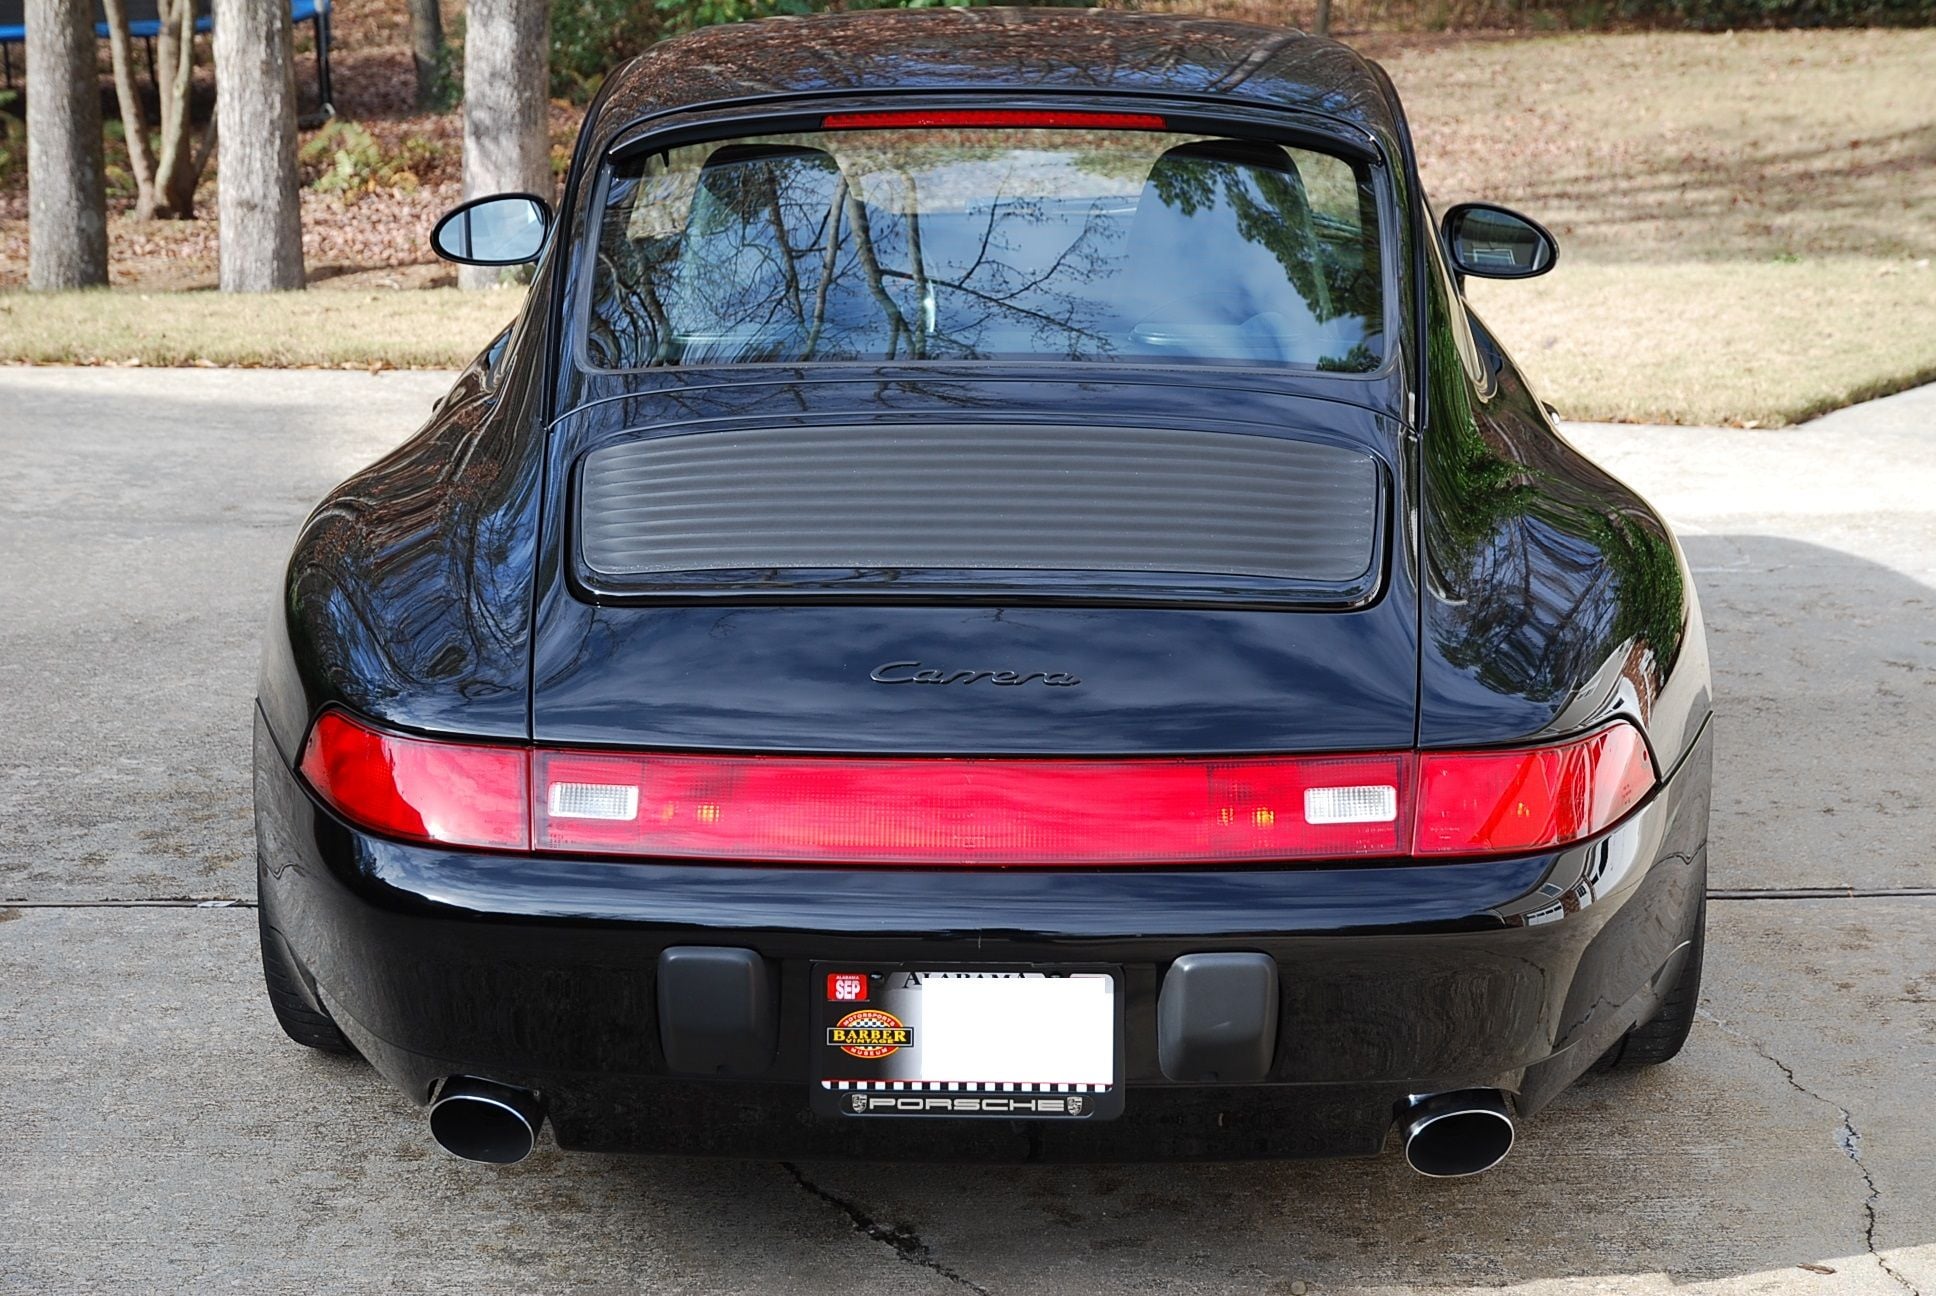 1997 Porsche 911 - 1997 Porsche 911 (993) Coupe, 6-speed, Black/Black, 59K miles - Used - VIN WP0AA2993VS321864 - 59,800 Miles - 6 cyl - 2WD - Manual - Coupe - Black - Birmingham, AL 35242, United States